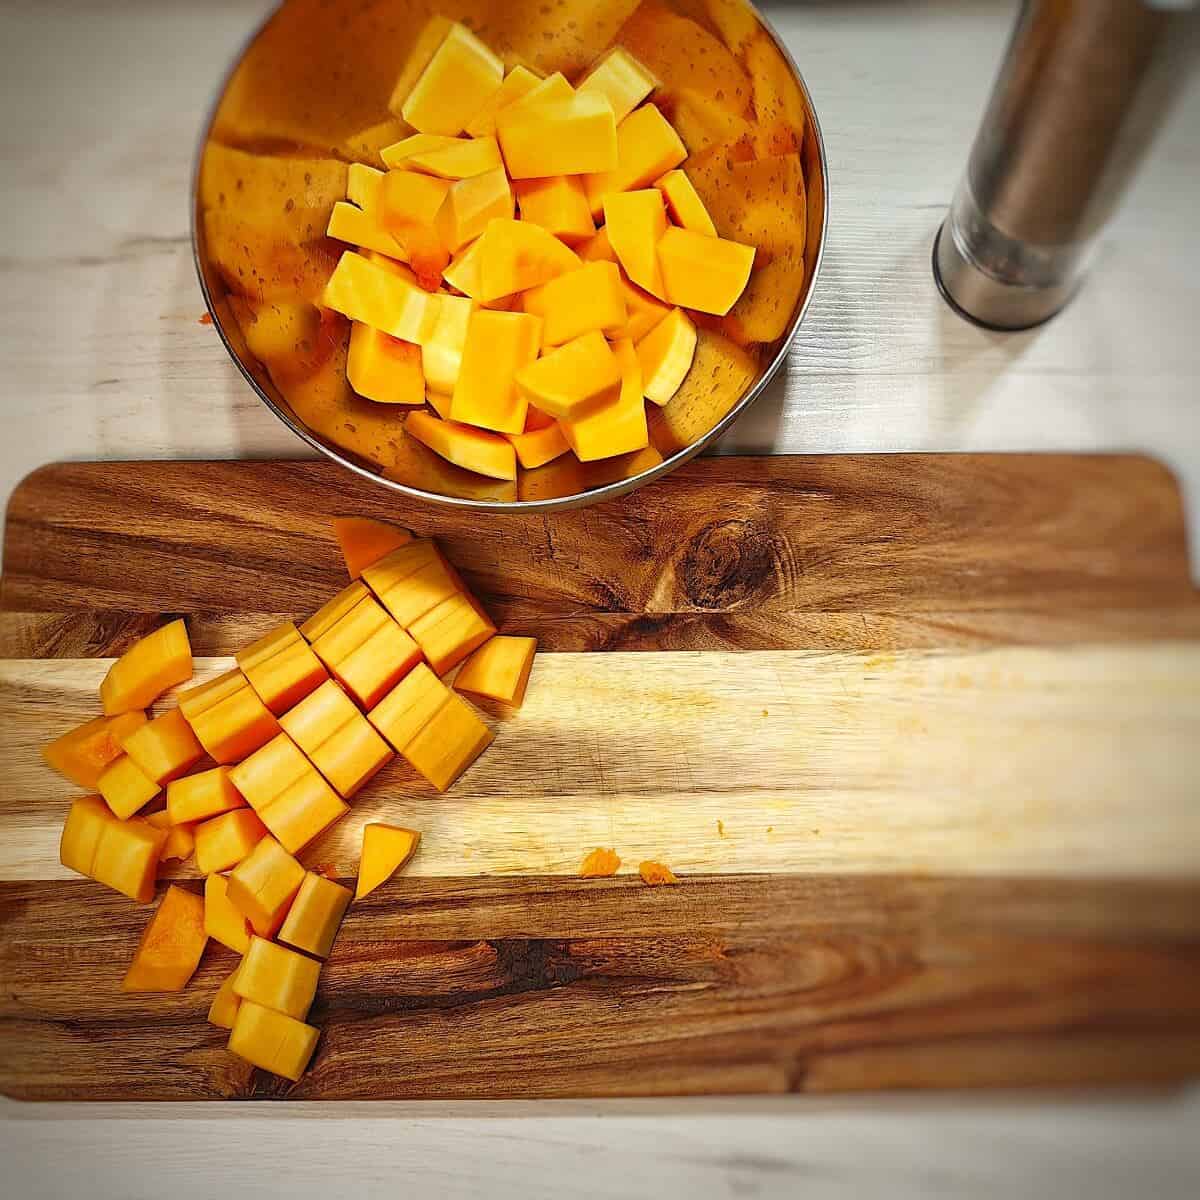 slice pumpkin into cubes